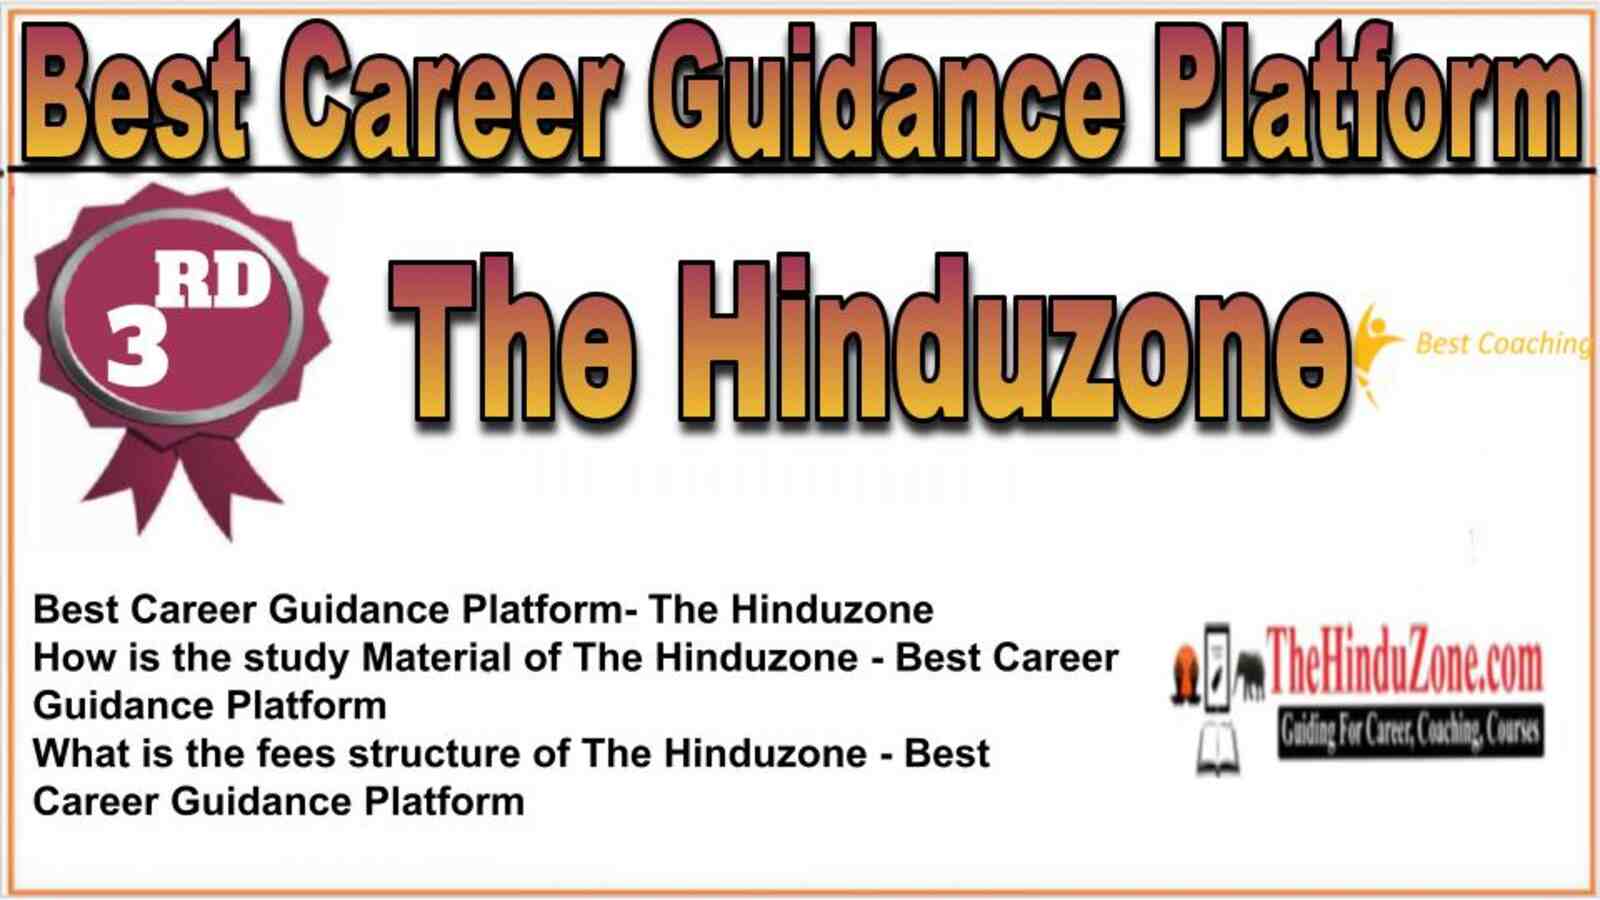 Rank 3 Best career guidance platform for History Optional